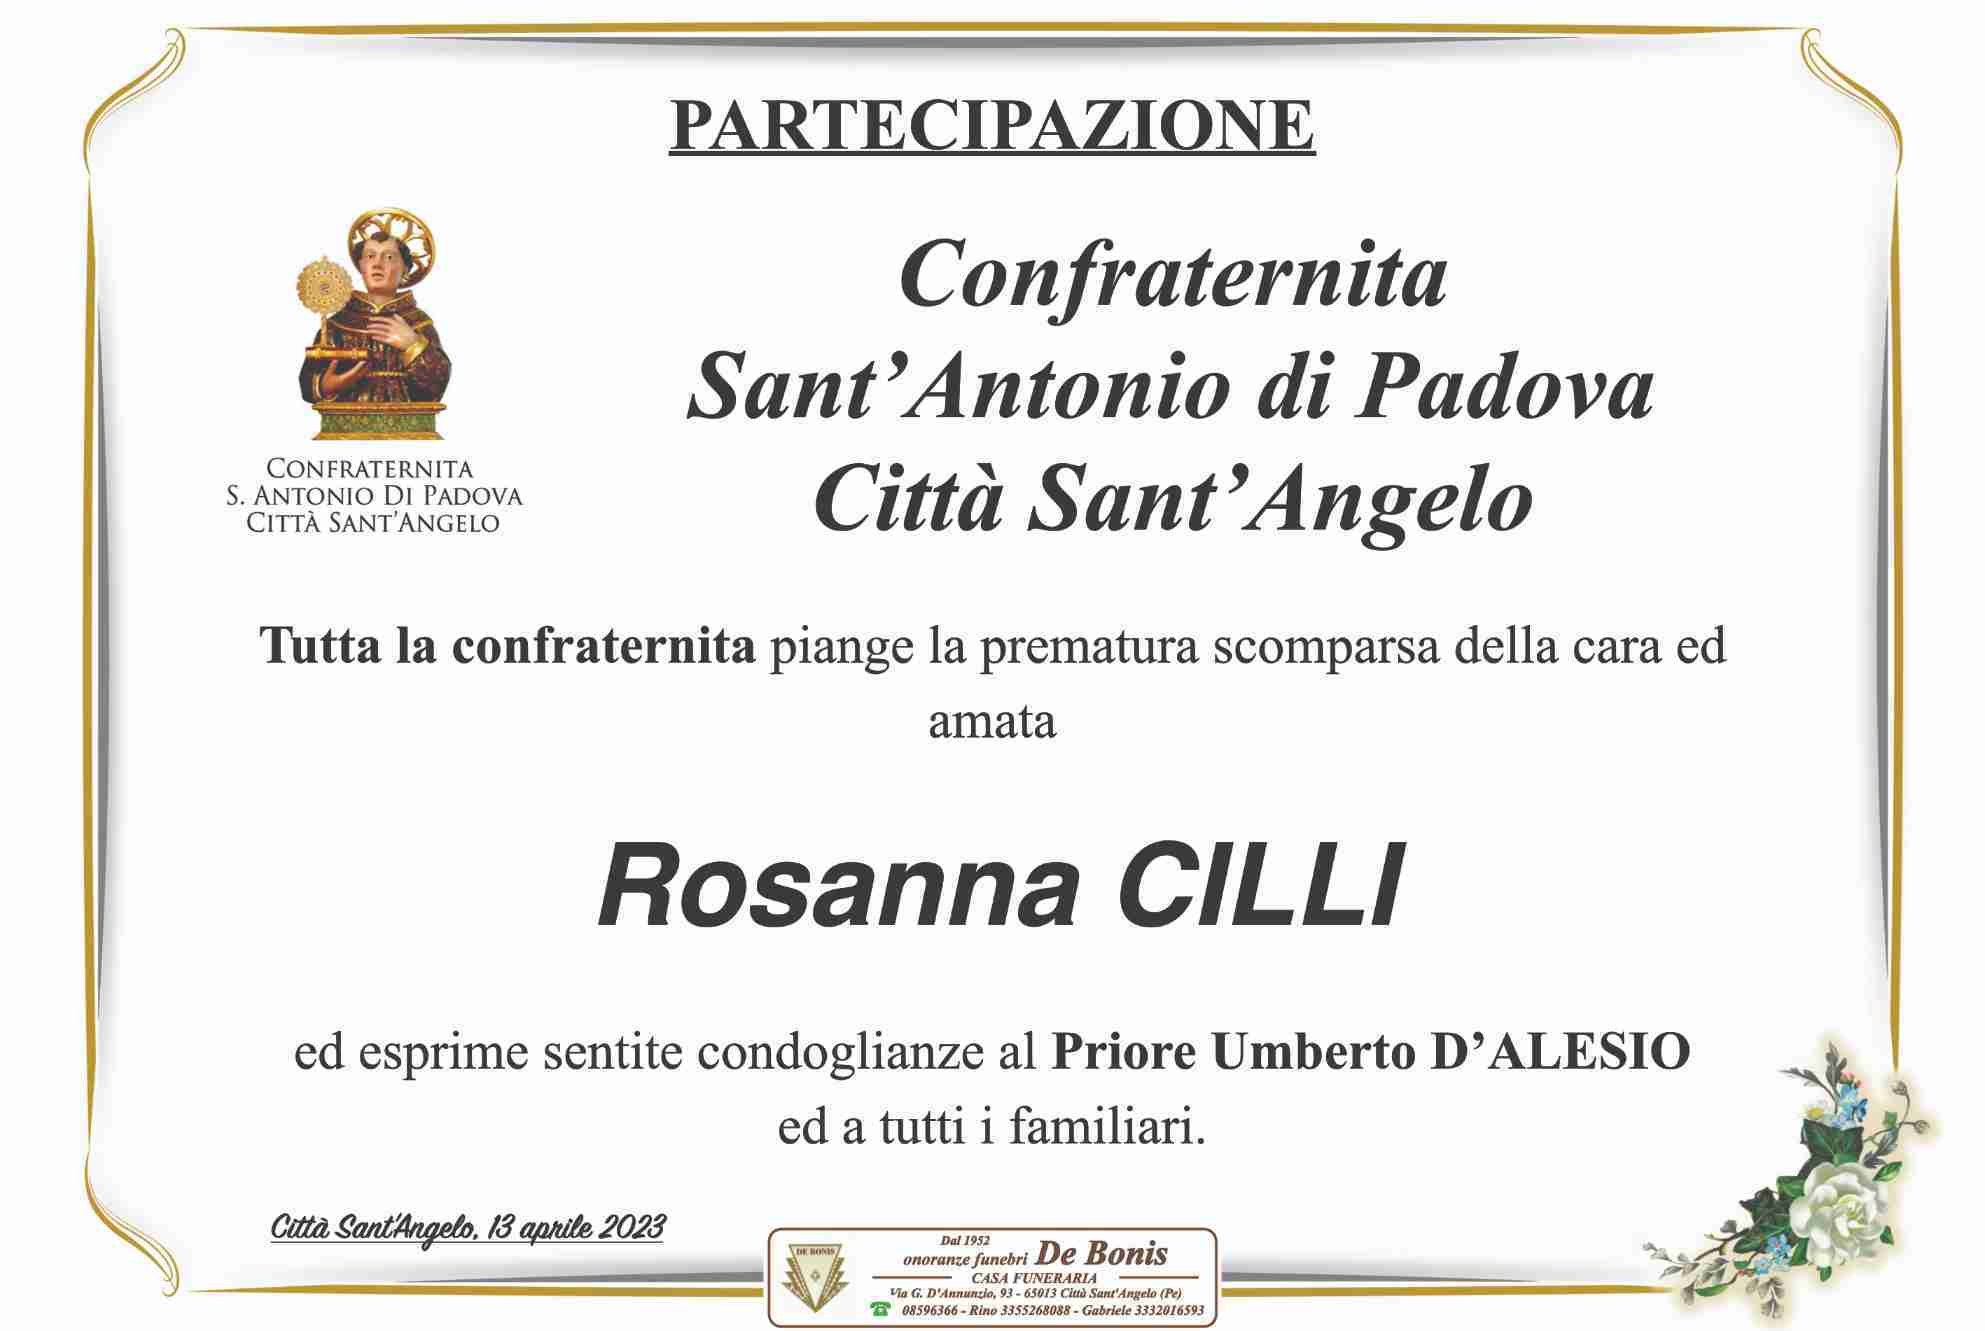 Rosanna Cilli